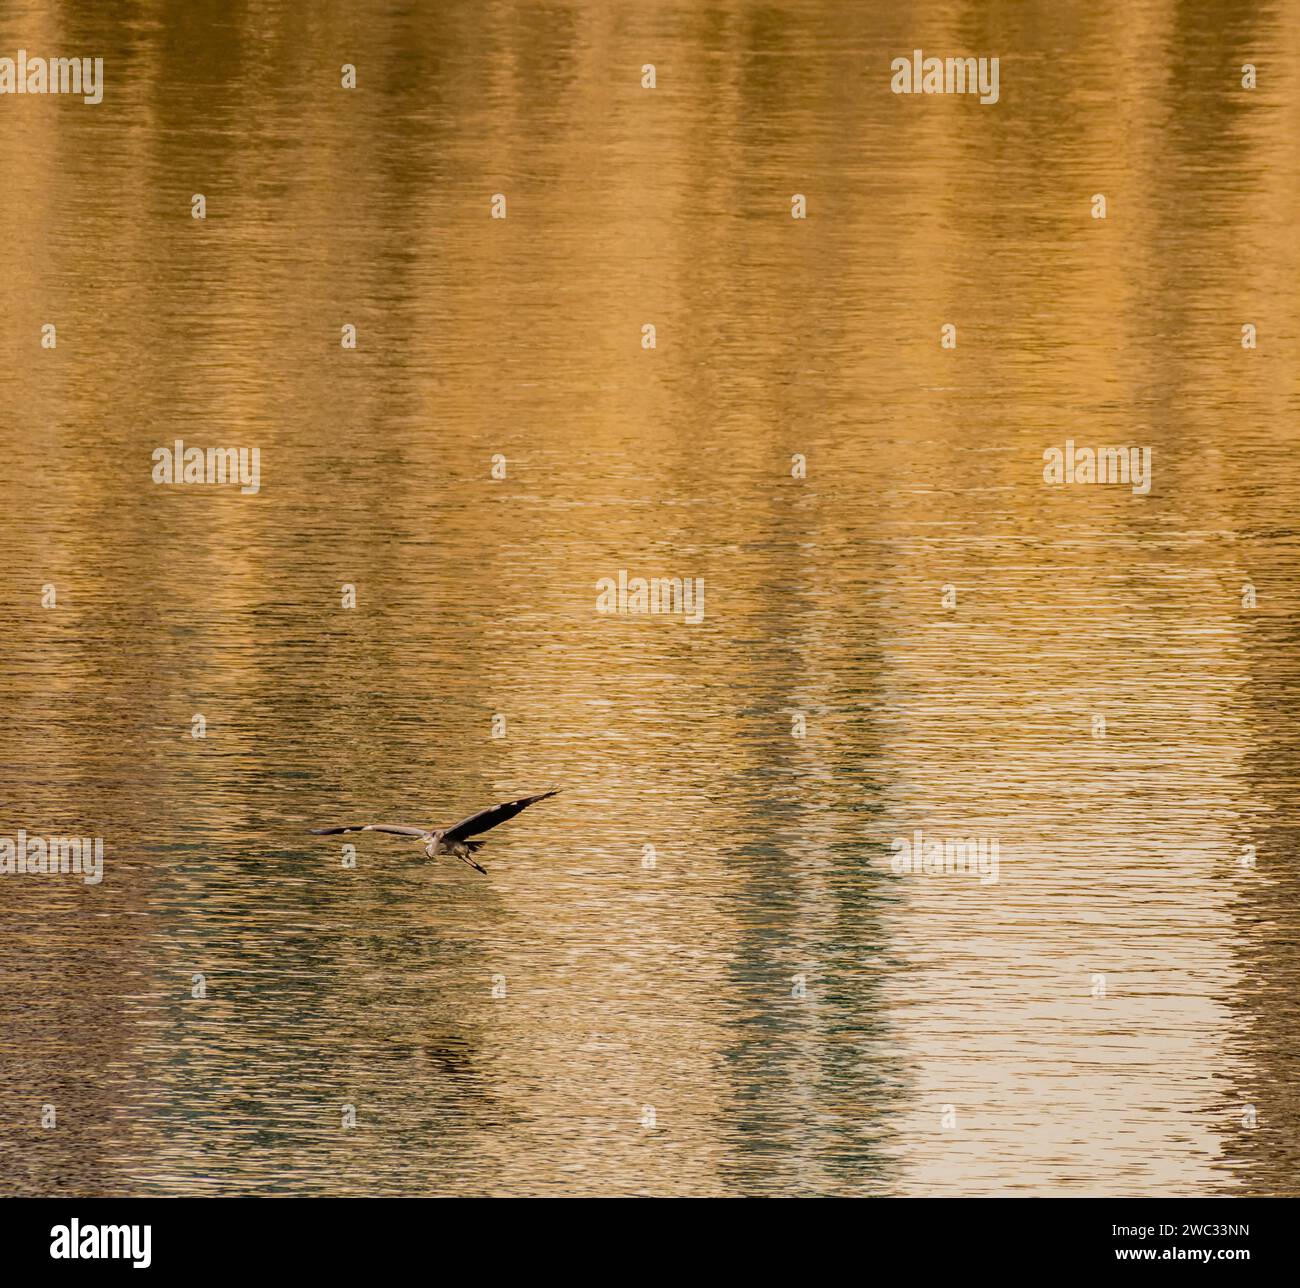 Single grey heron gliding over river with a golden hue Stock Photo